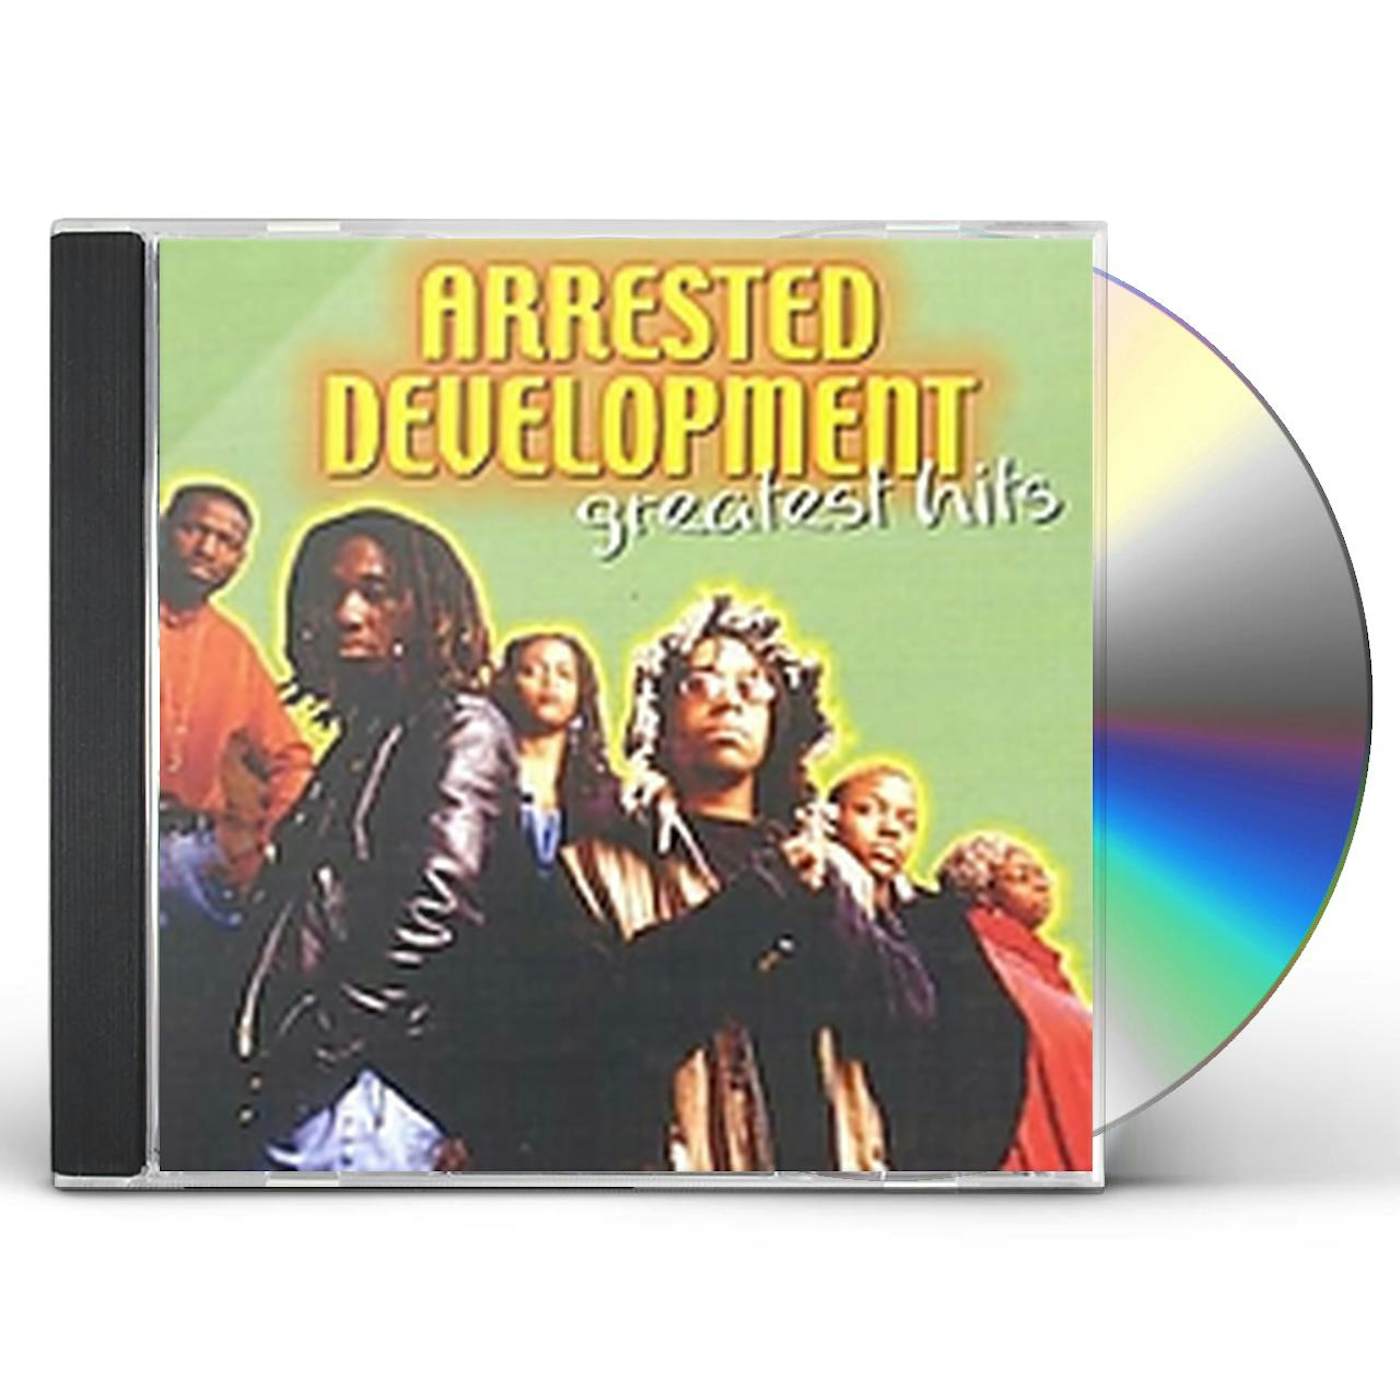 Arrested Development GREATEST HITS CD